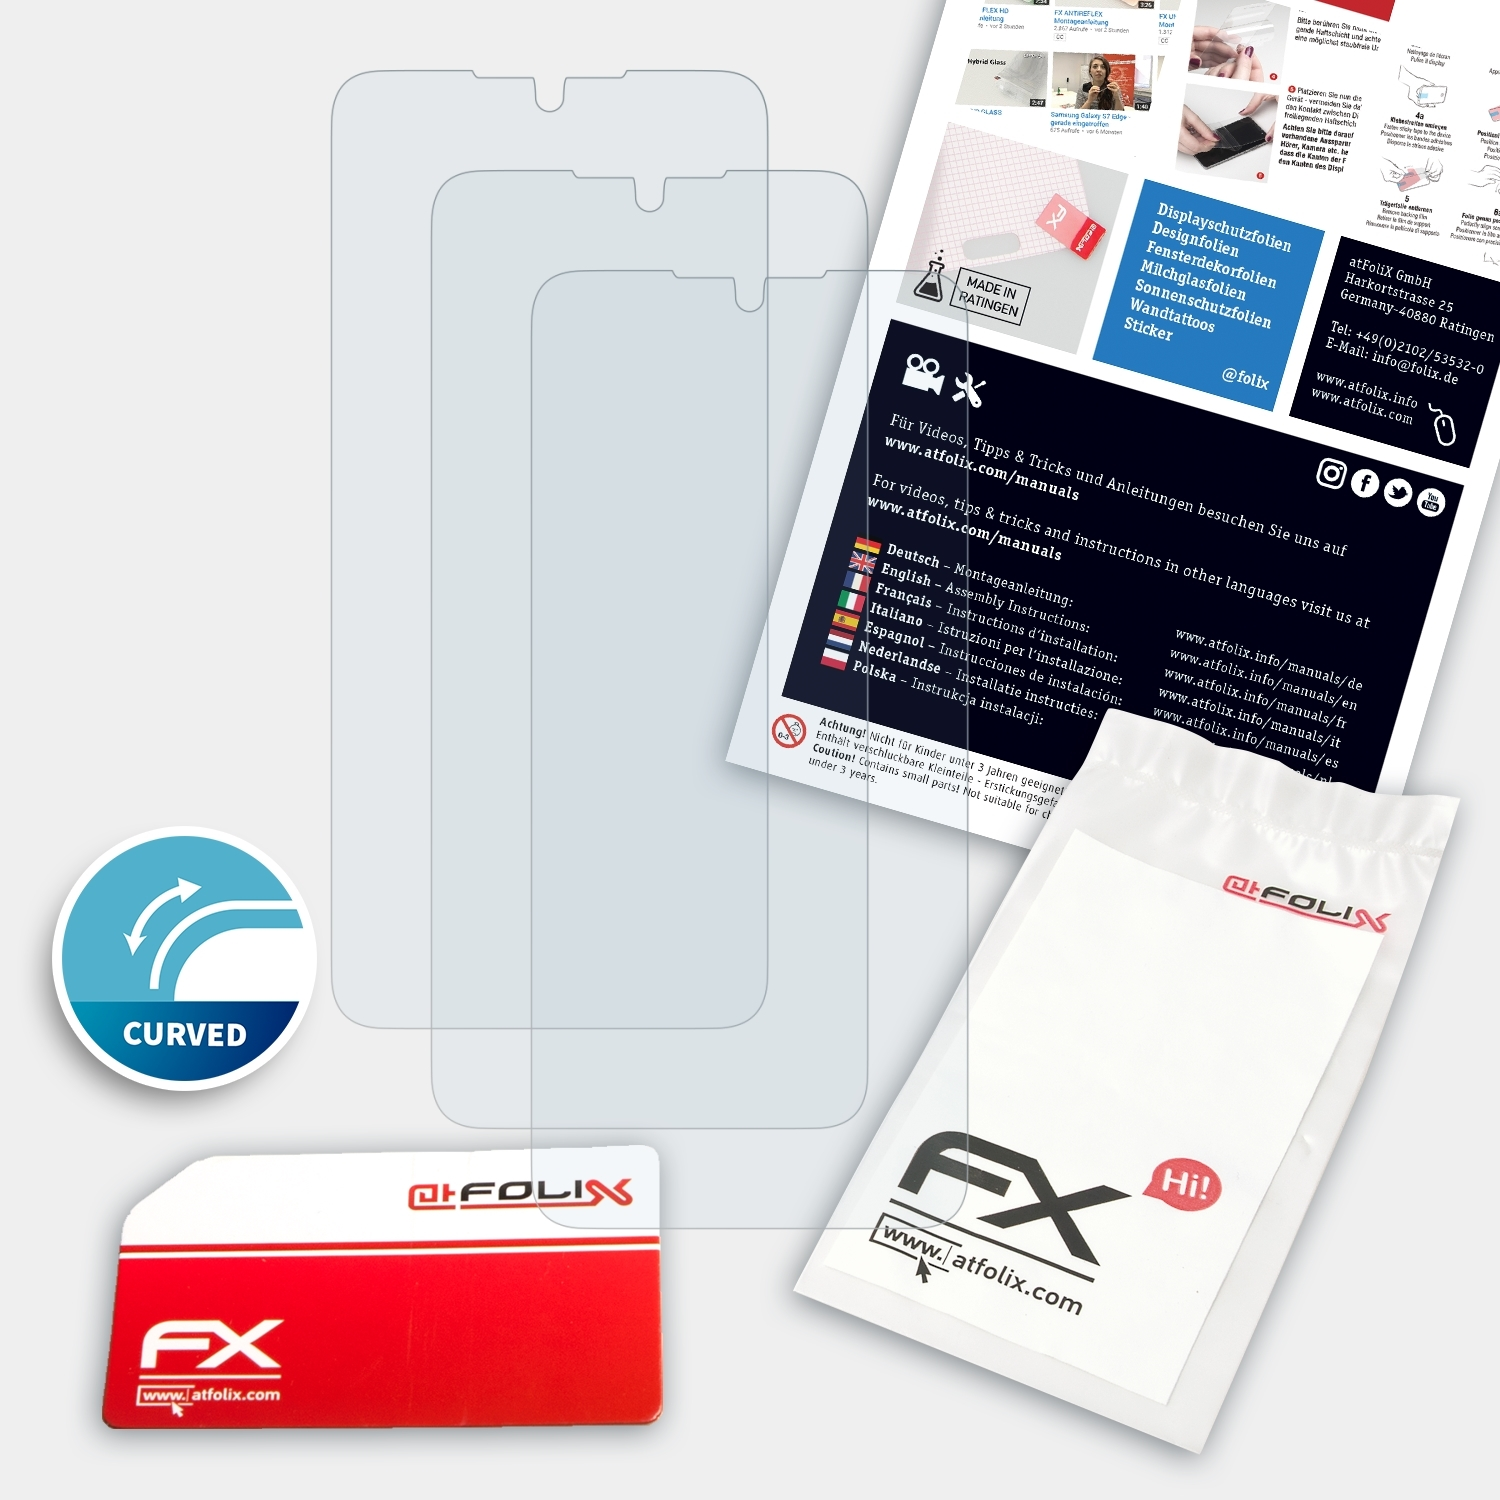 Nokia 6.2) Displayschutz(für 3x ATFOLIX FX-ActiFleX